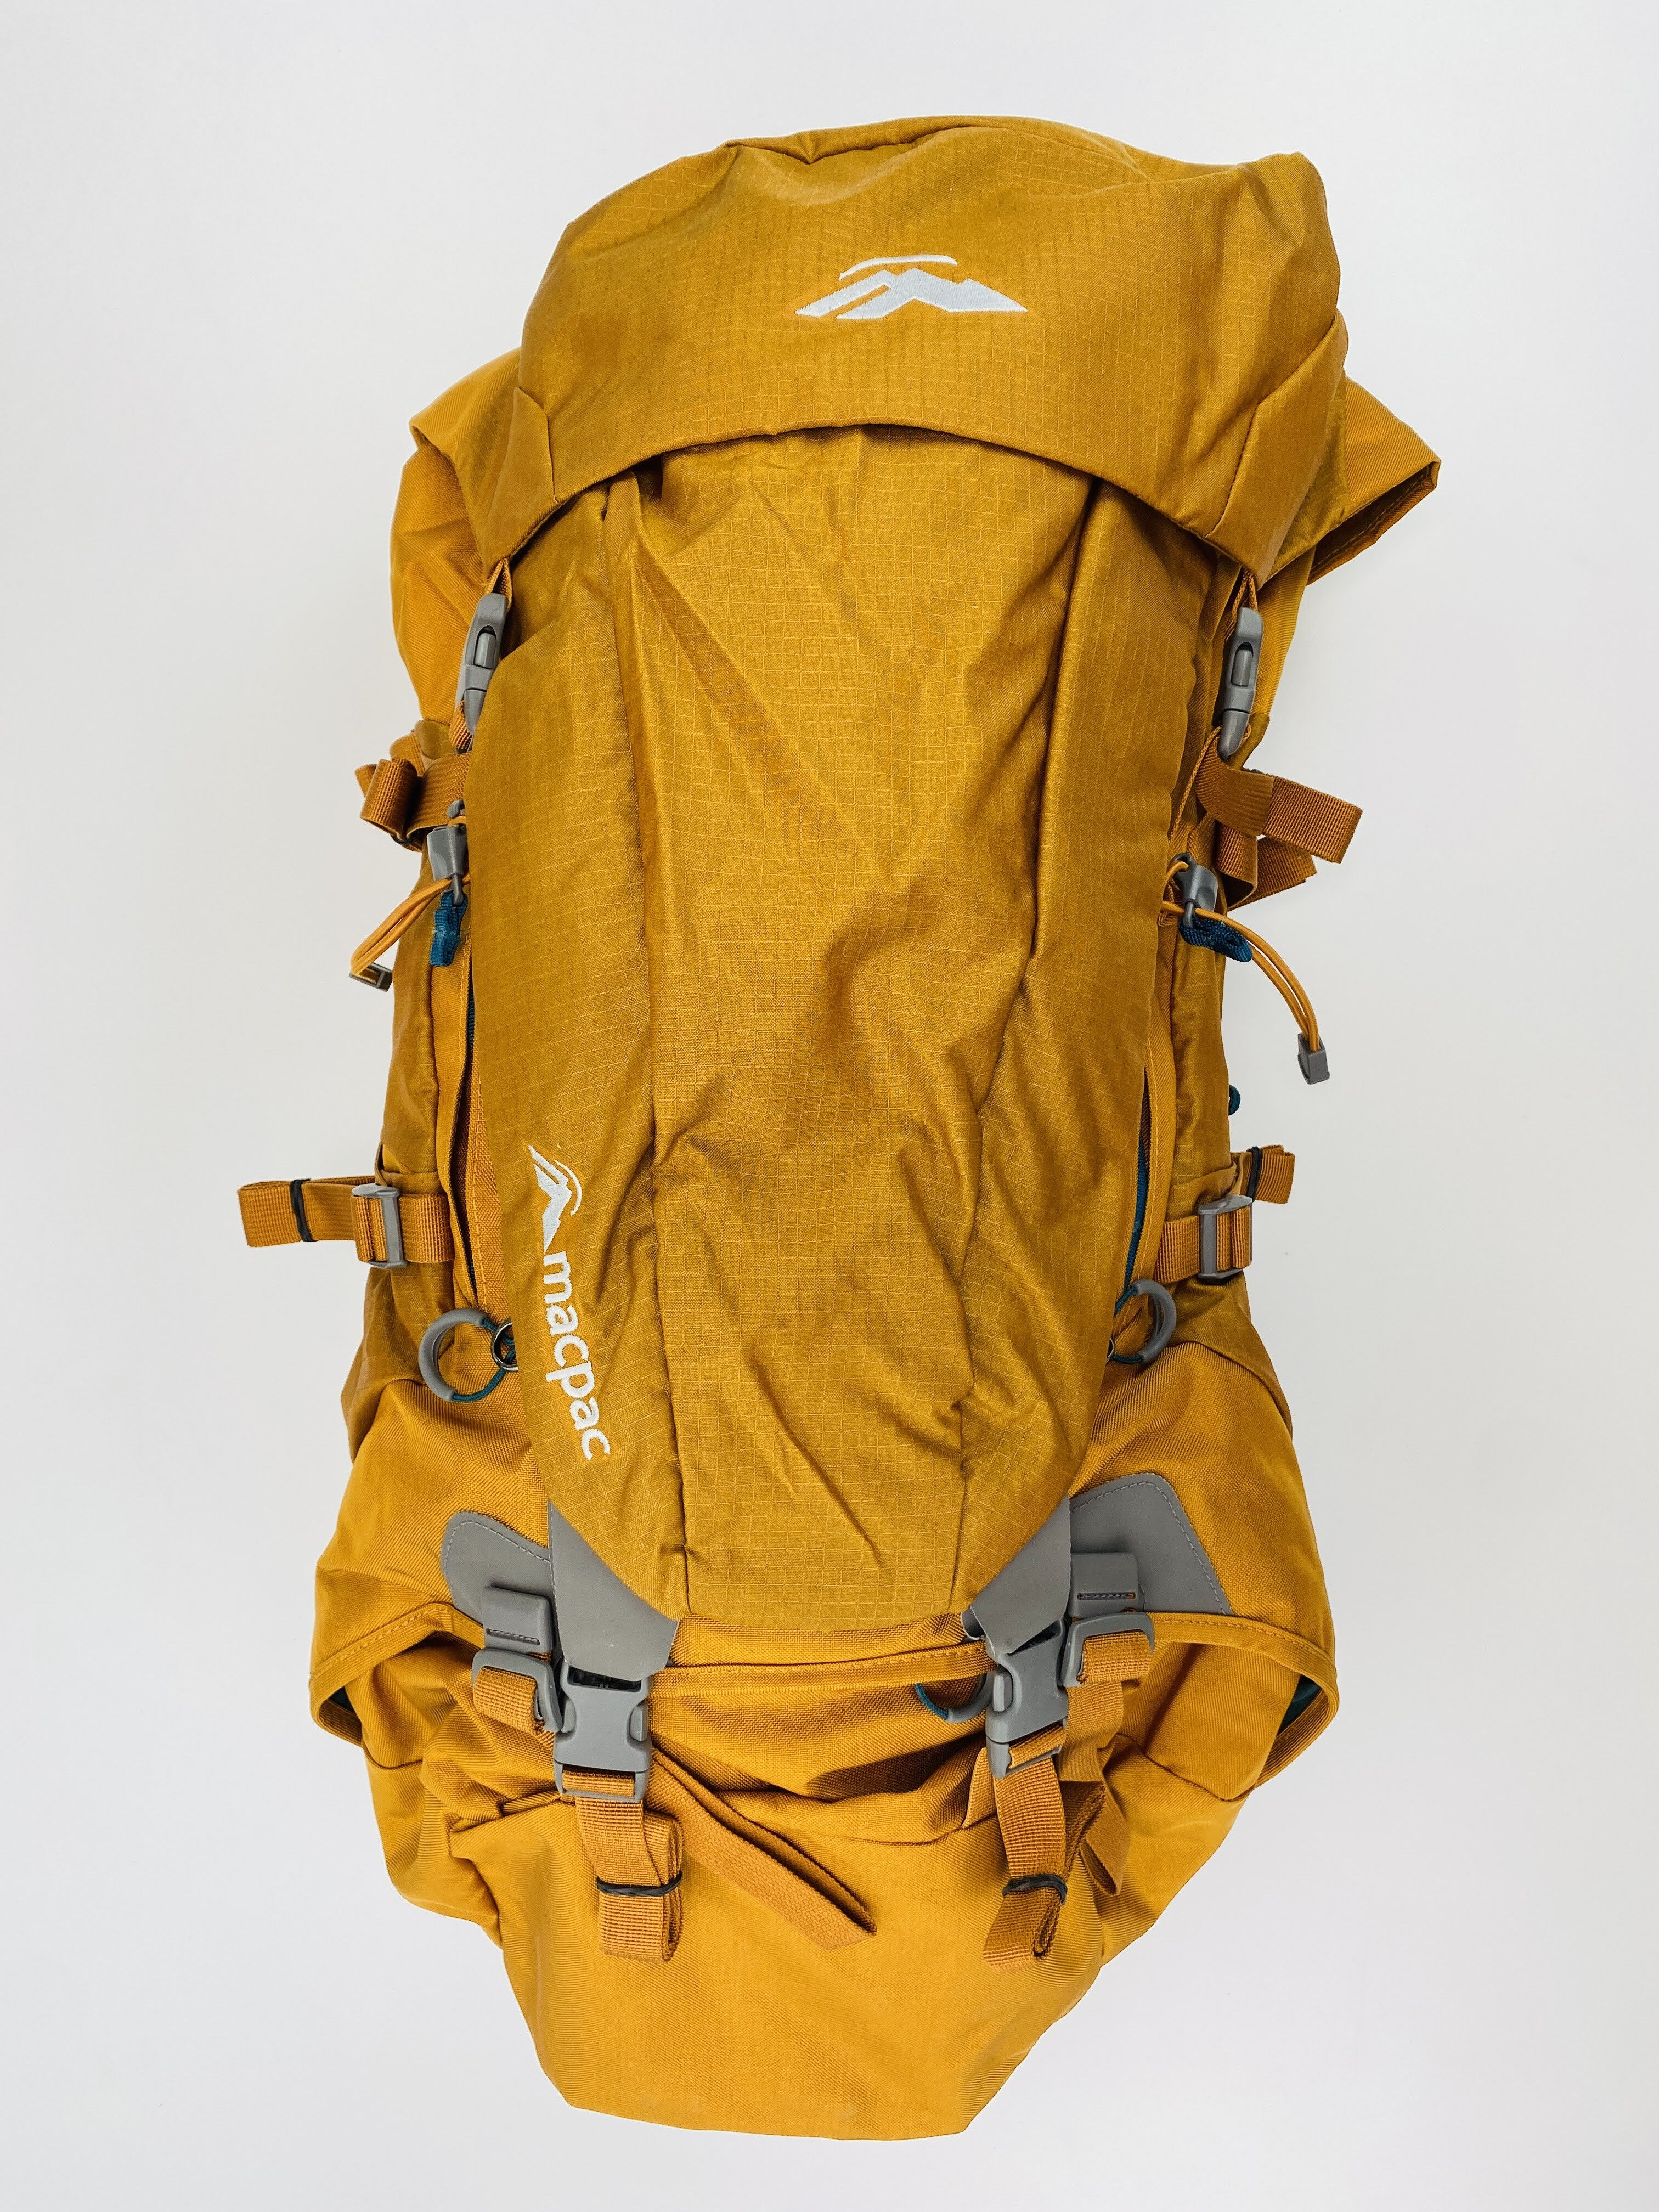 Macpac Torlesse 50L - Second Hand Backpack - Golden - 50 L | Hardloop